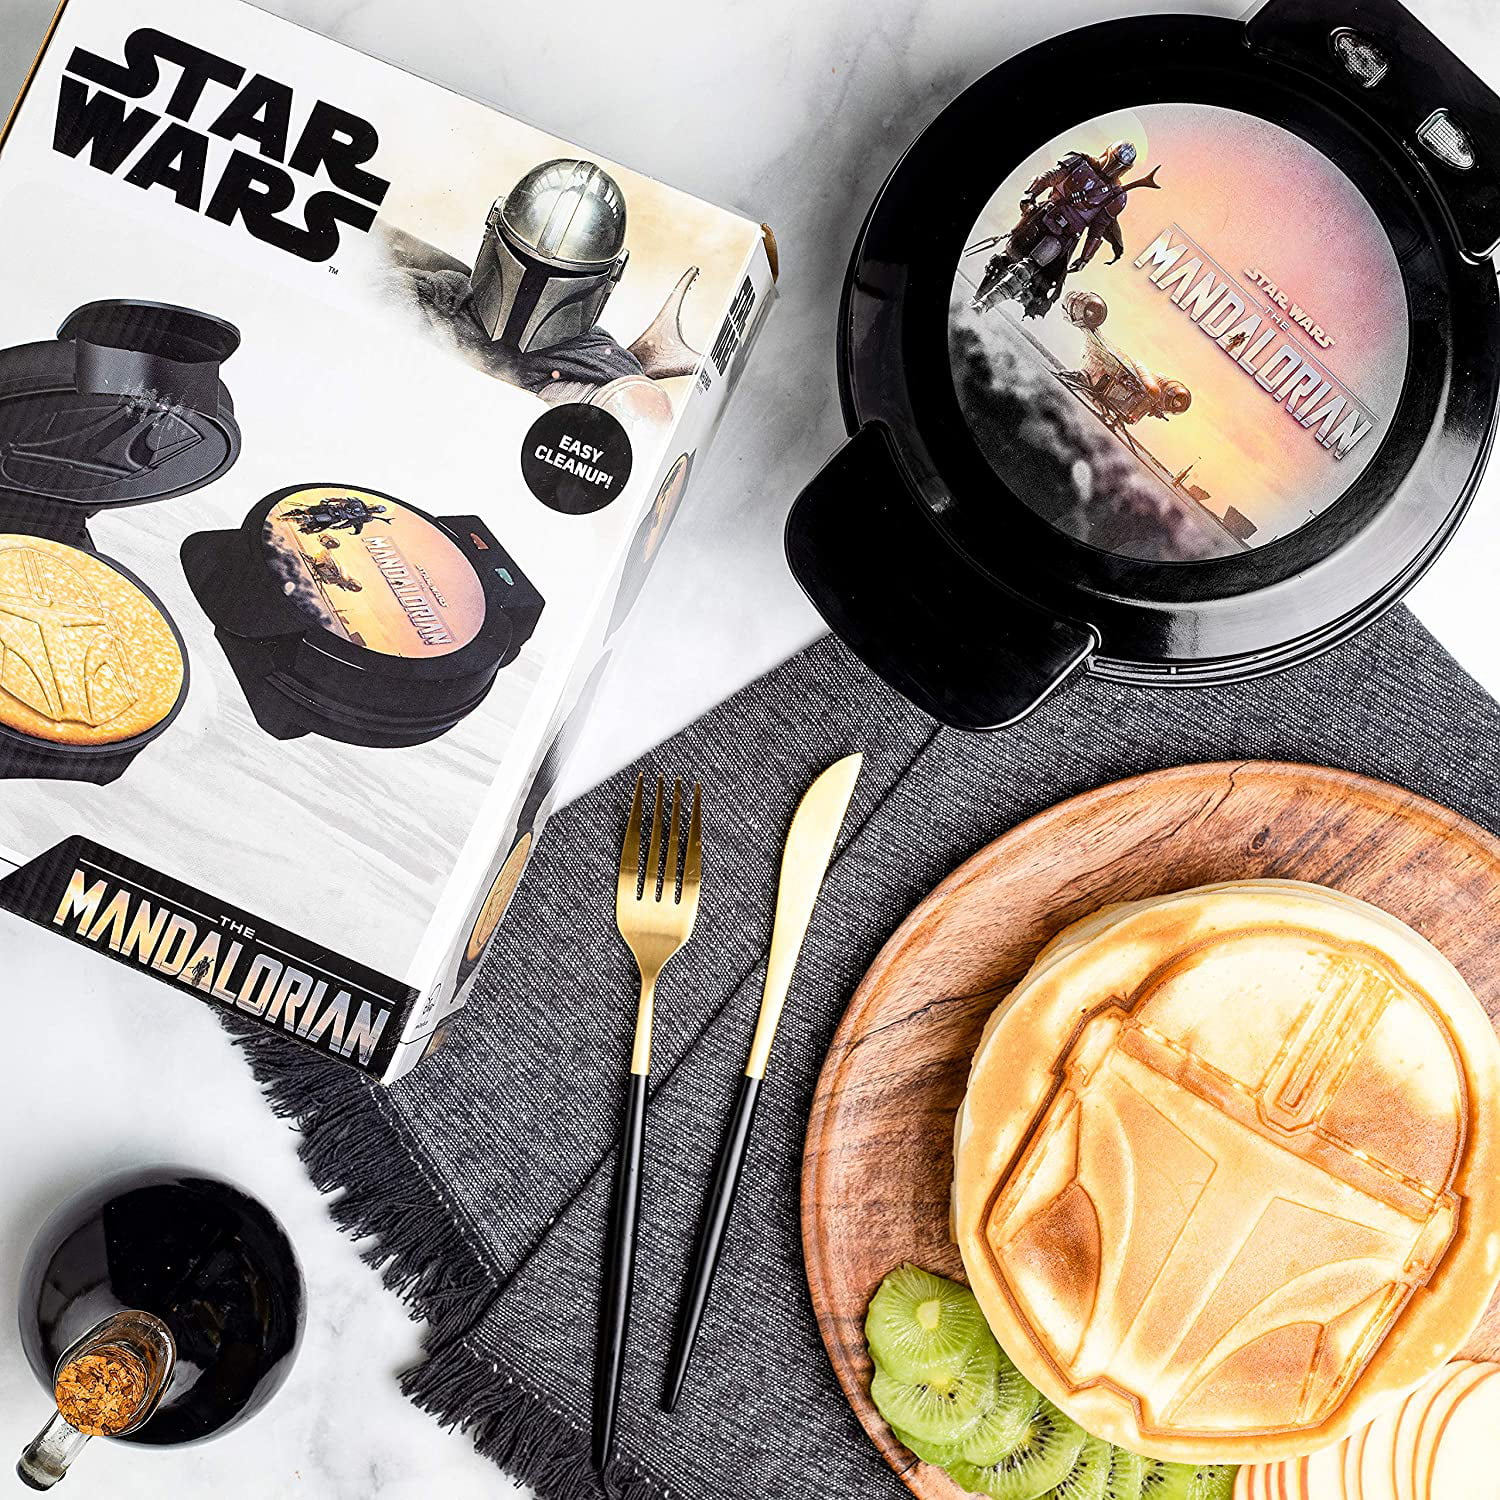 Star Wars Mandalorian Helmet Shaped Waffle Maker - Star Wars 